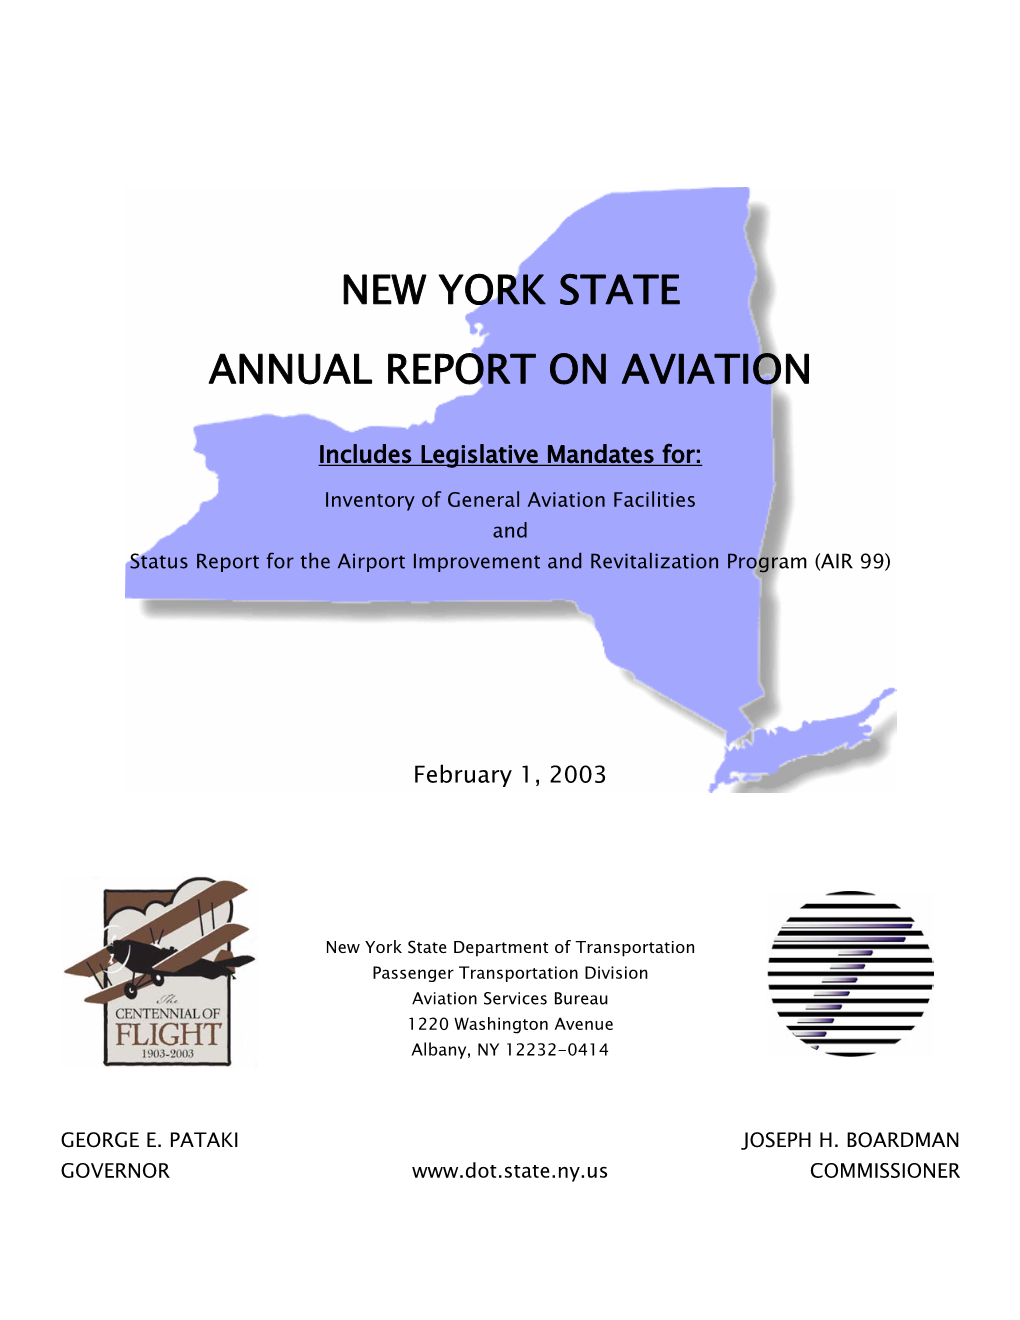 NYSDOT Annual Report on Aviation